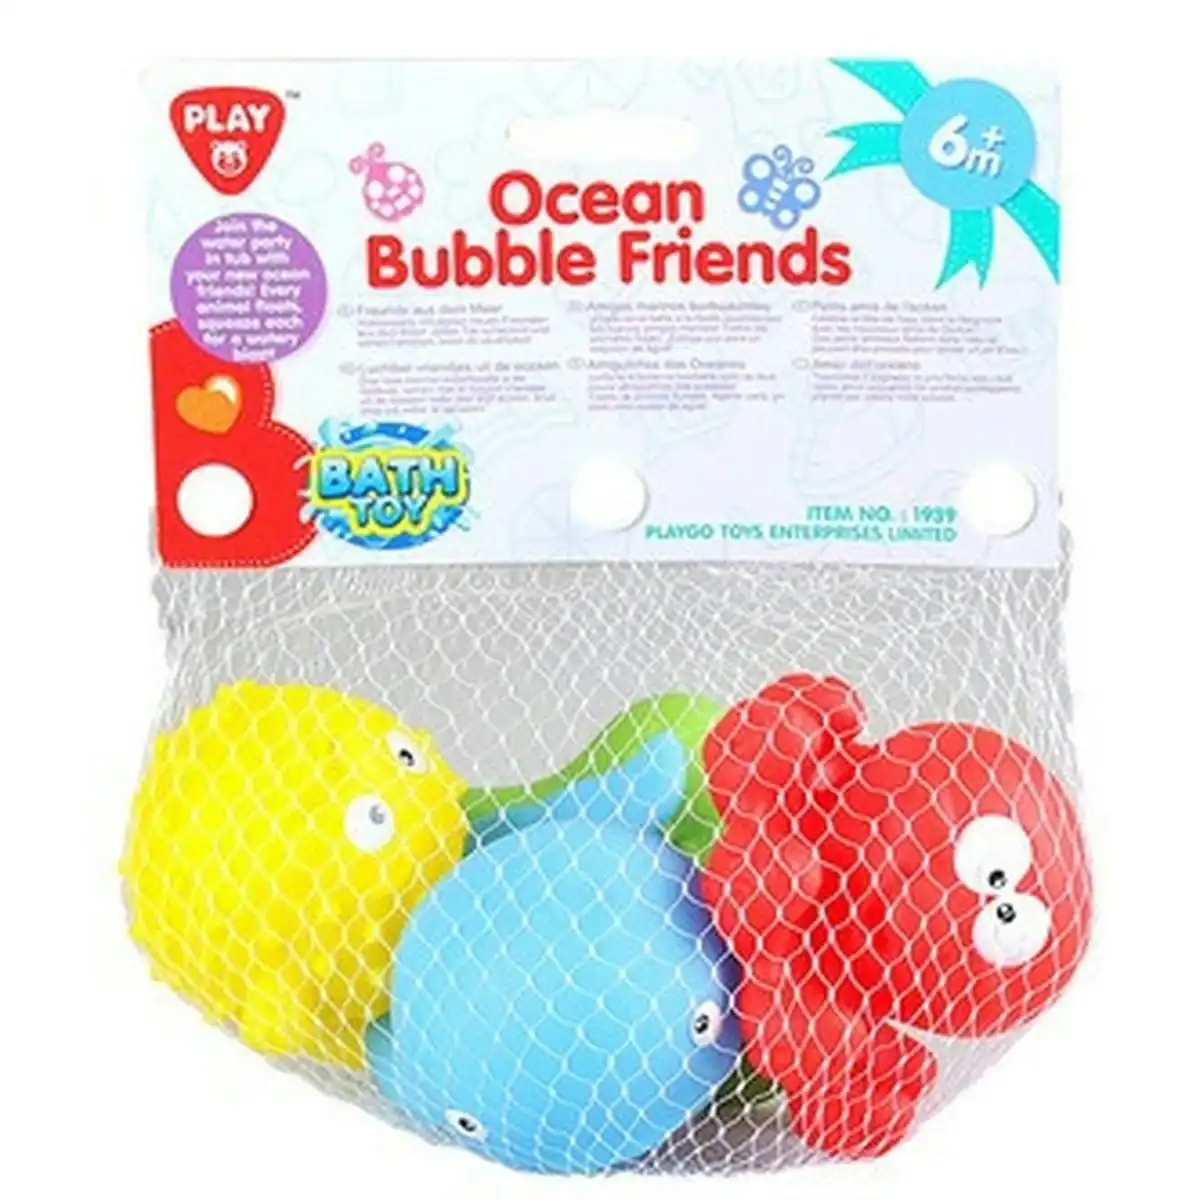 Ocean Bubble Friends Bath Toys - Assorted  Playgo Toys Ent. Ltd